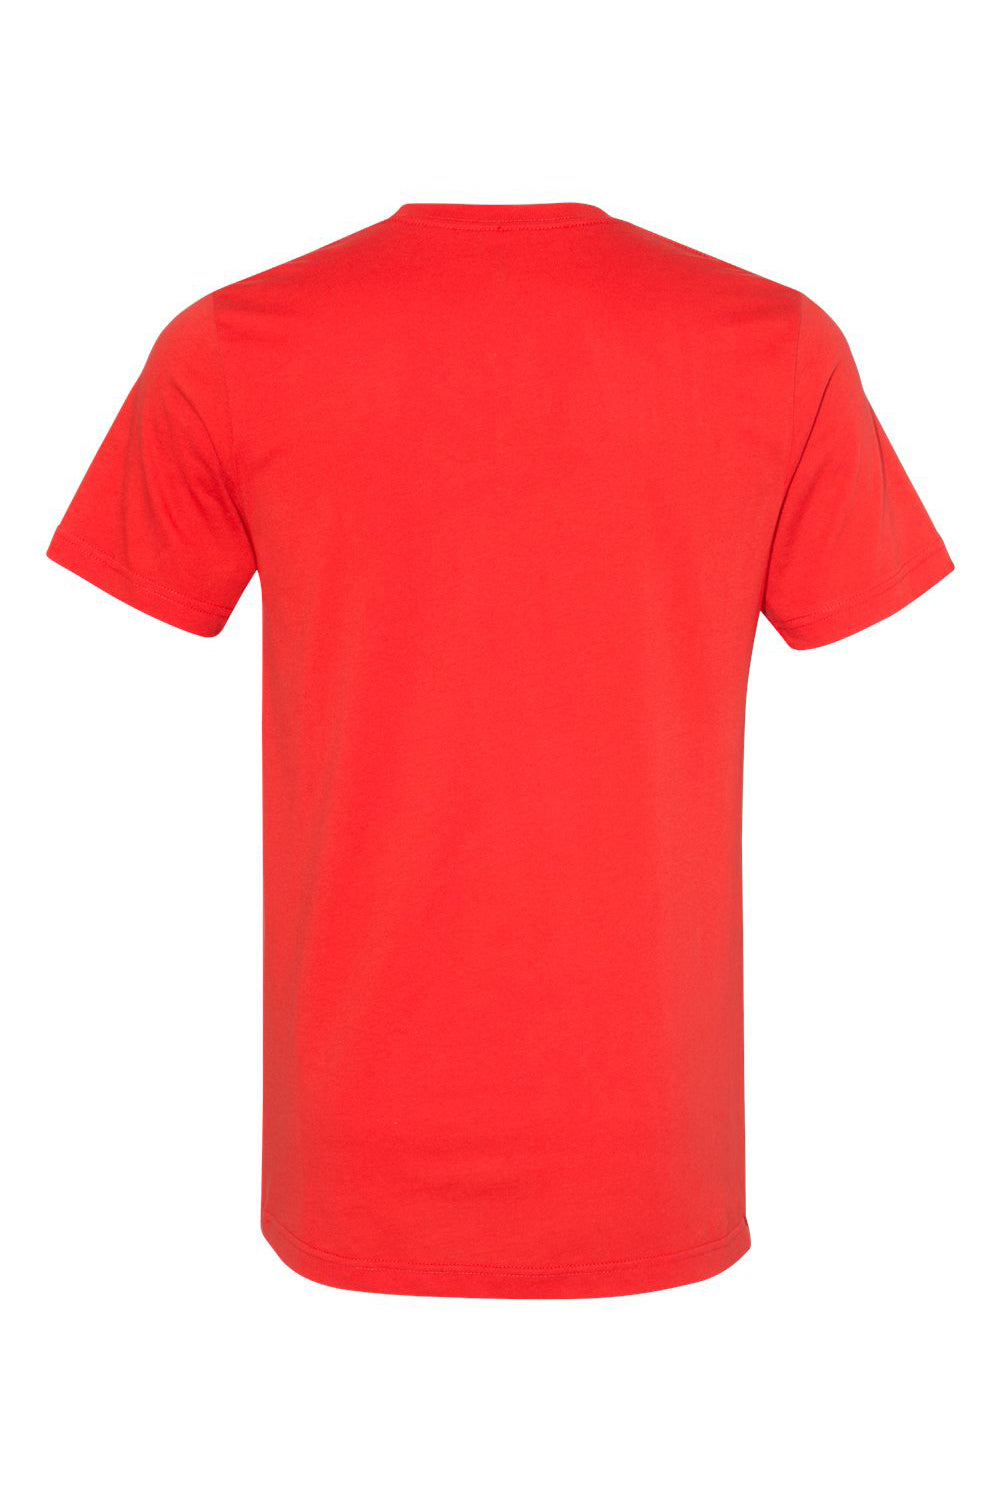 Bella + Canvas BC3001/3001C Mens Jersey Short Sleeve Crewneck T-Shirt Poppy Orange Flat Back